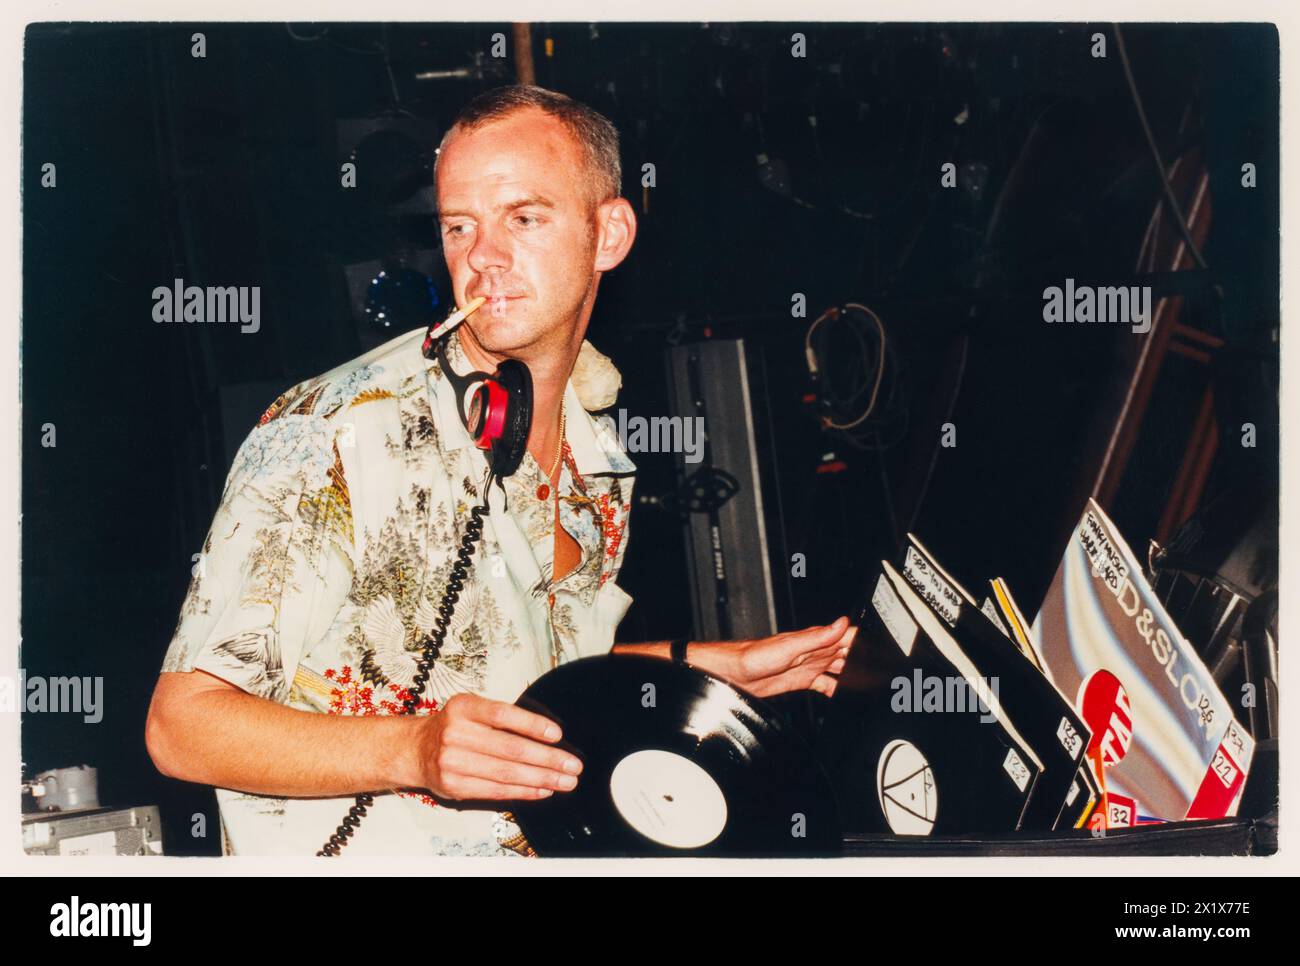 SUPERSTAR DJ, FATBOY SLIM, HOMELANDS FESTIVAL, 1999: Legendärer DJ Fatboy Slim – echter Name Norman Cook – spielt live beim Homelands Festival 1999, während er am 29. Mai 1999 eine Zigarette raucht. Foto: Rob Watkins. Stockfoto